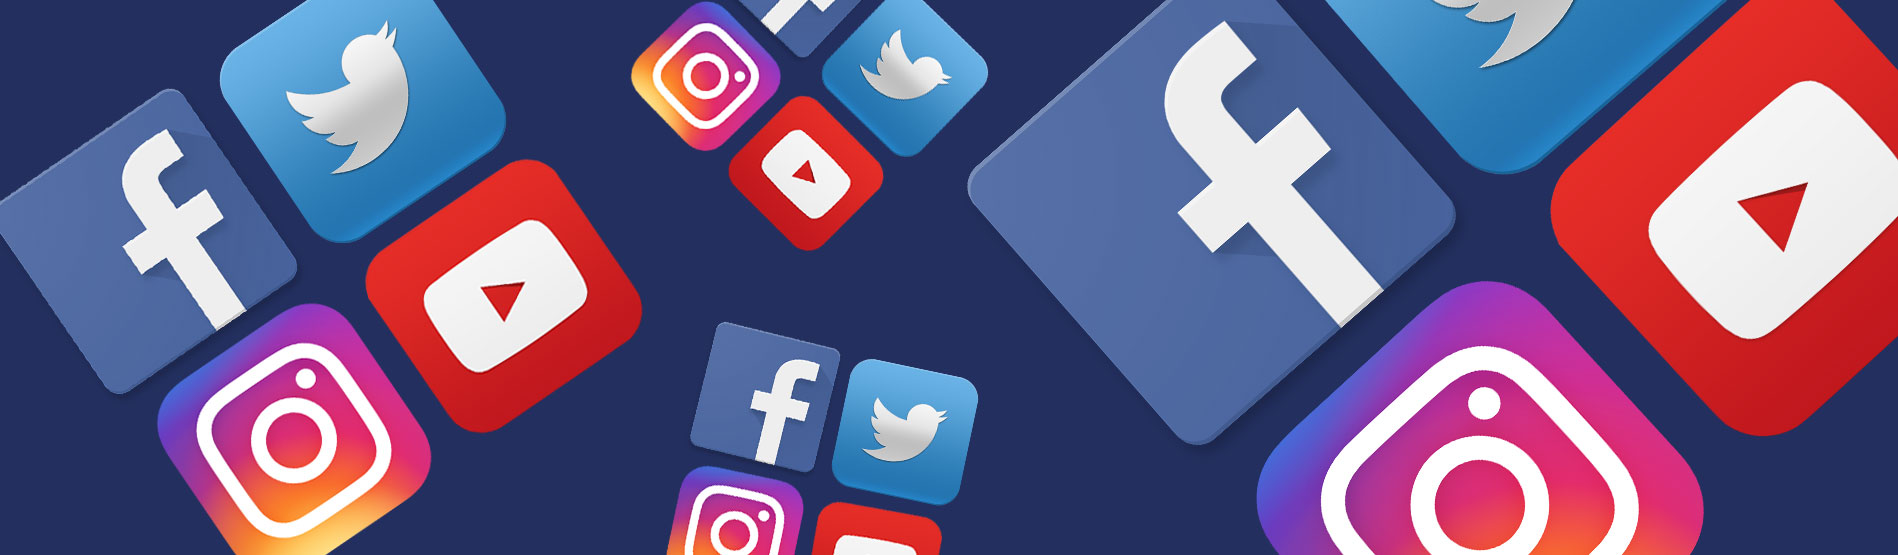 social media apps for the university, twitter, Instagram, youtube and facebook